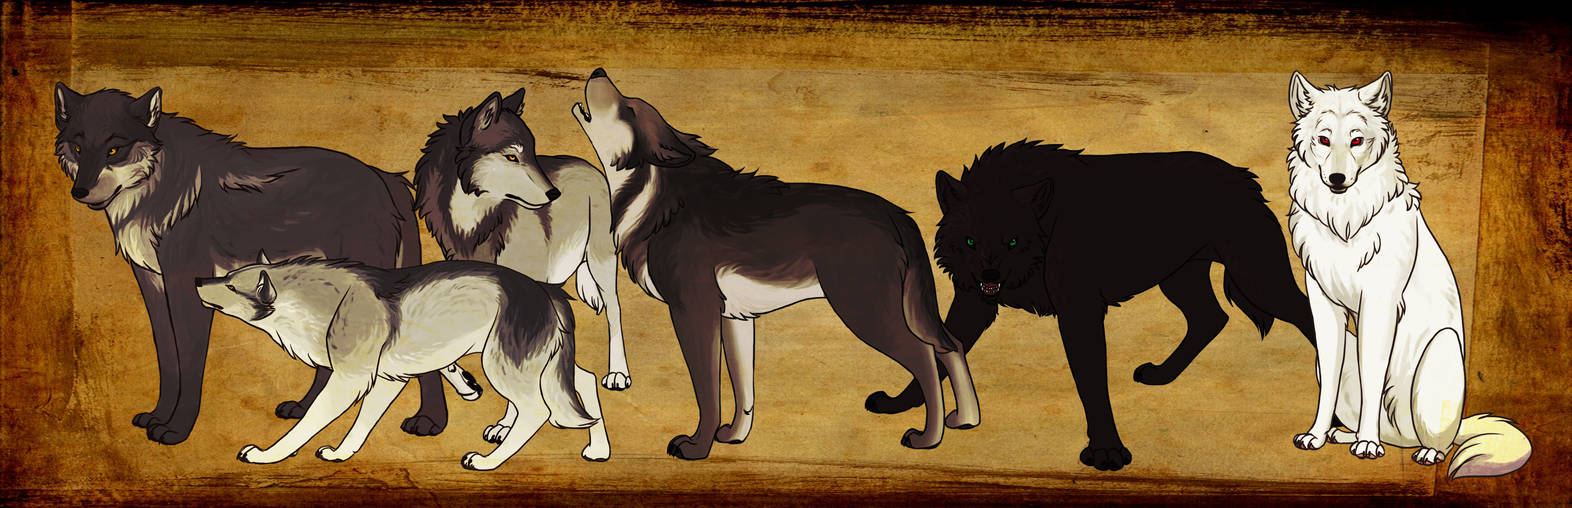 Stark Wolves by wolfpup026 on DeviantArt